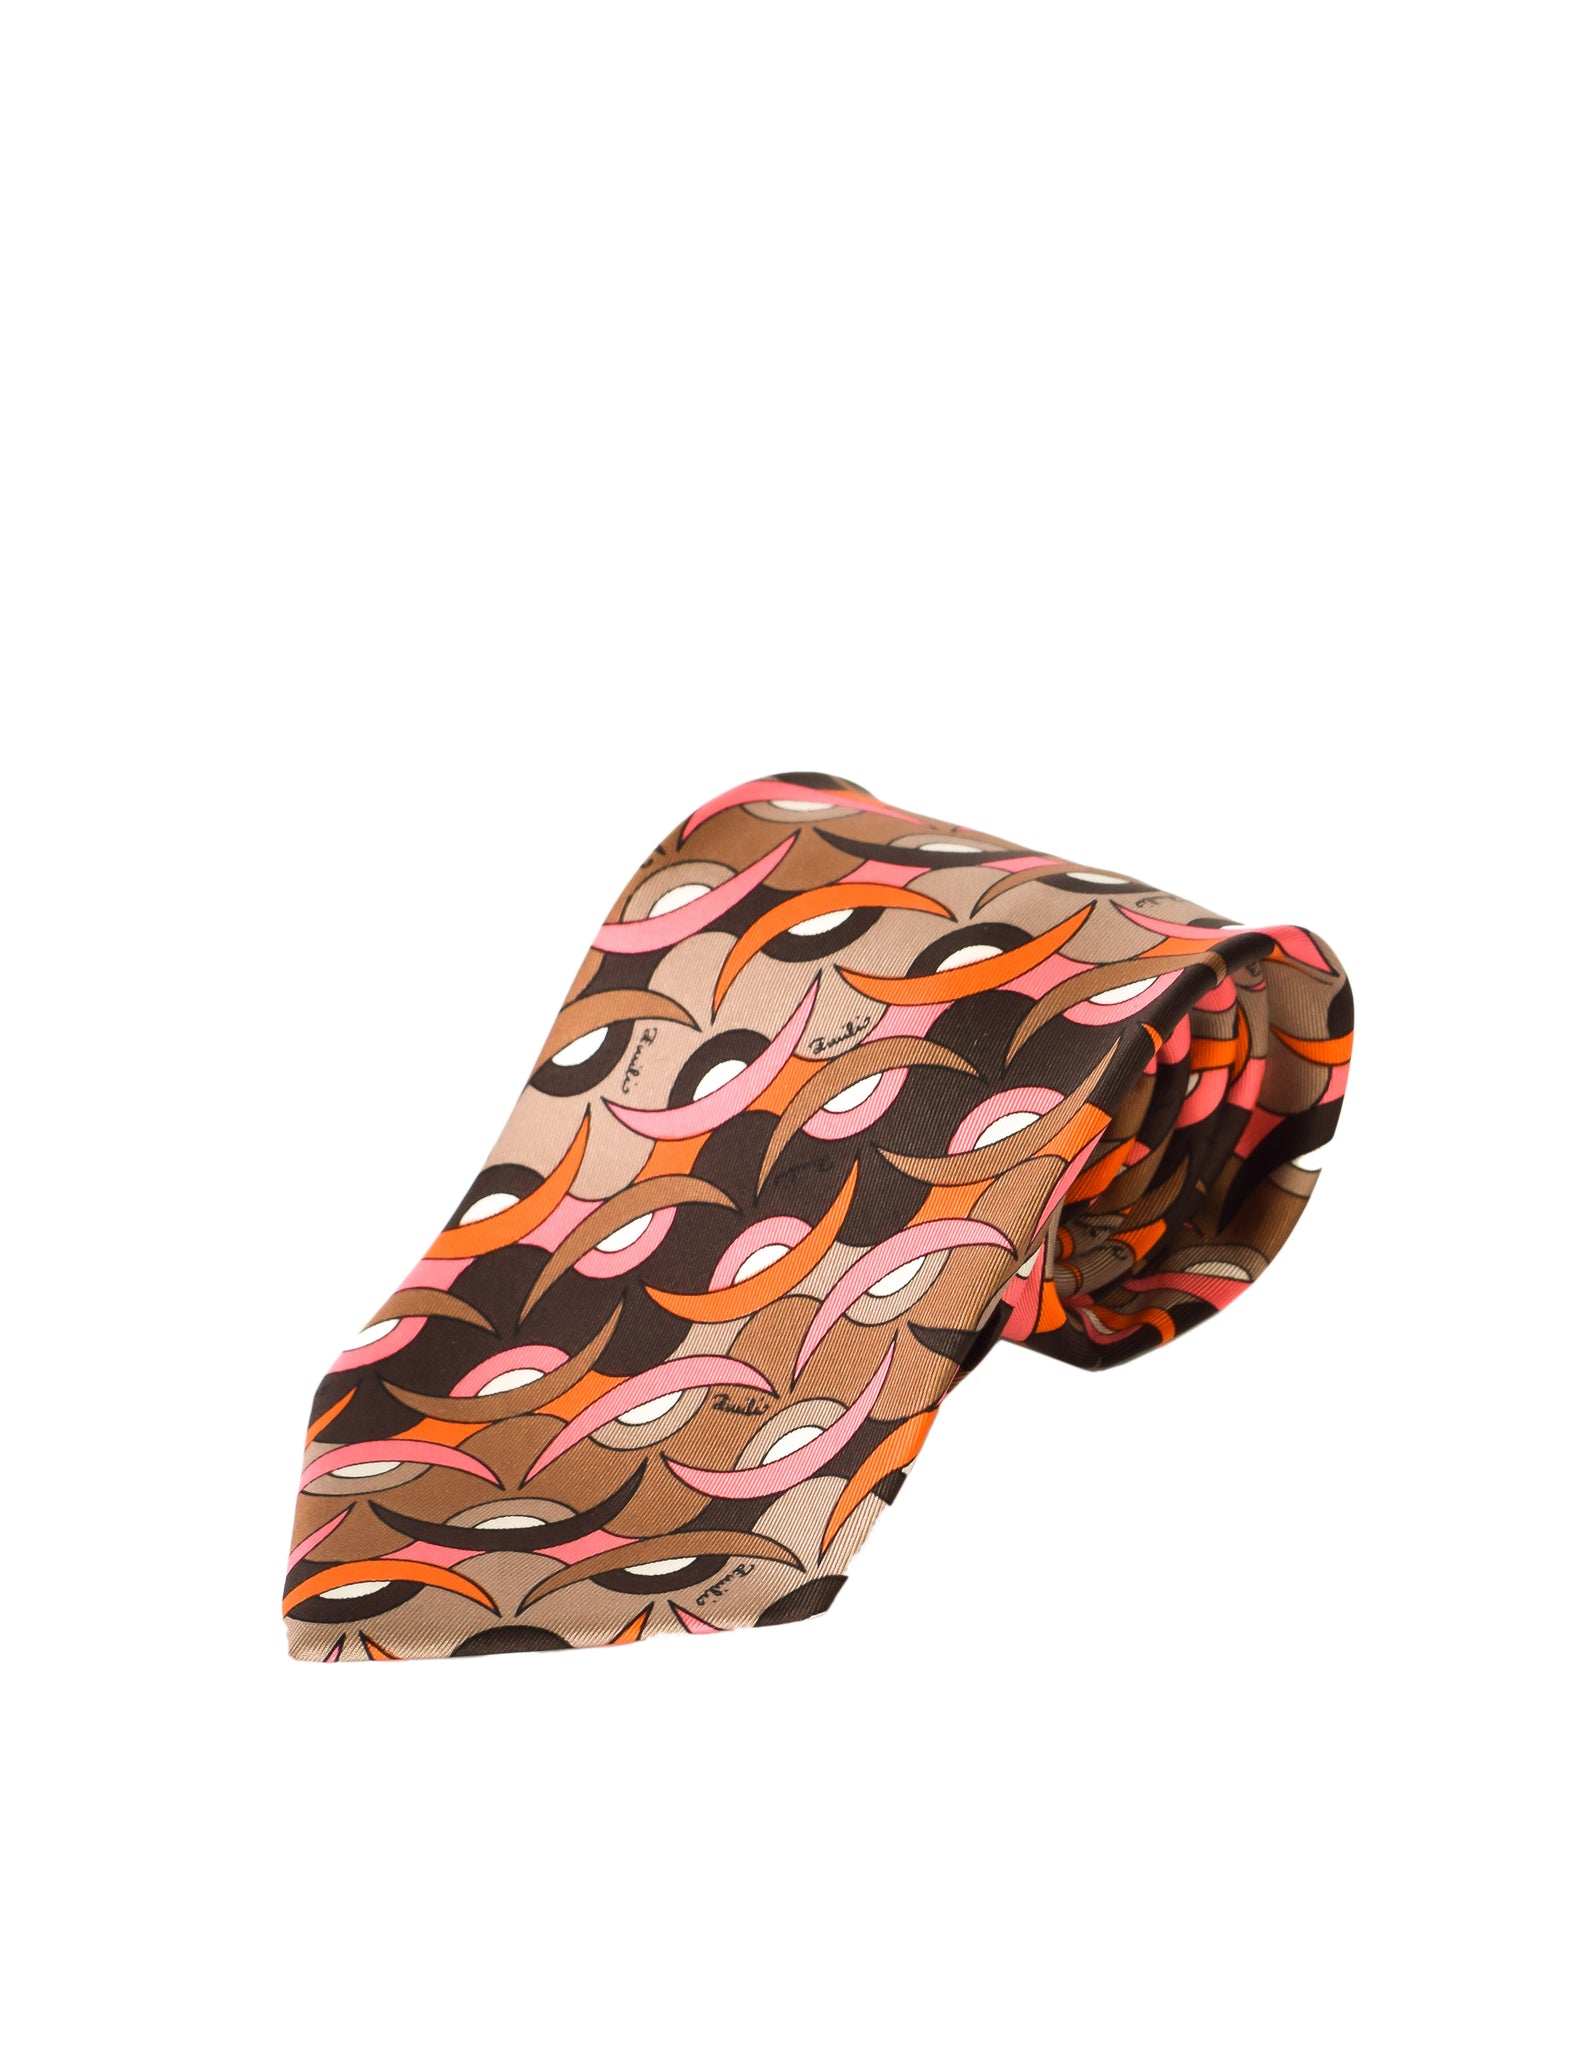 Emilio Pucci Vintage Brown and Pink Mod Graphic Silk Neck Tie